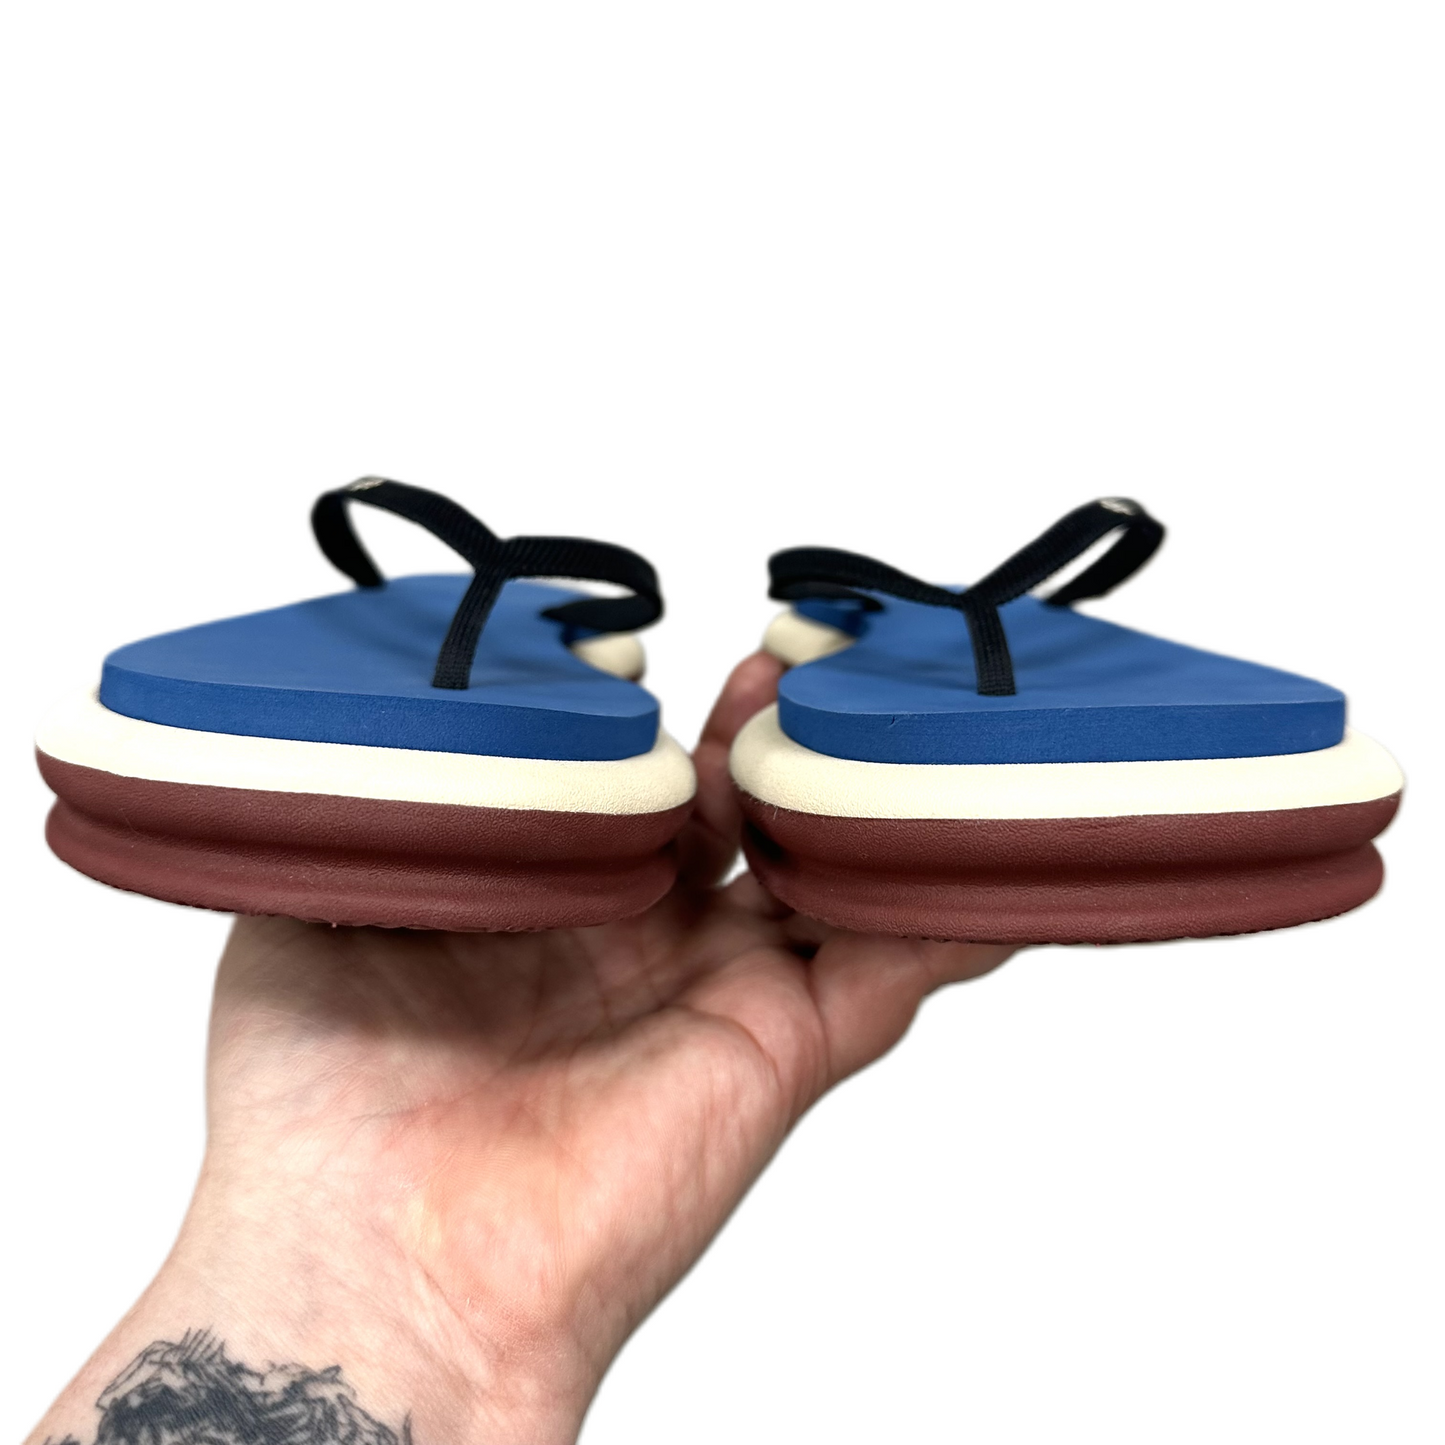 Sandals Flip Flops By Tory Burch  Size: 9